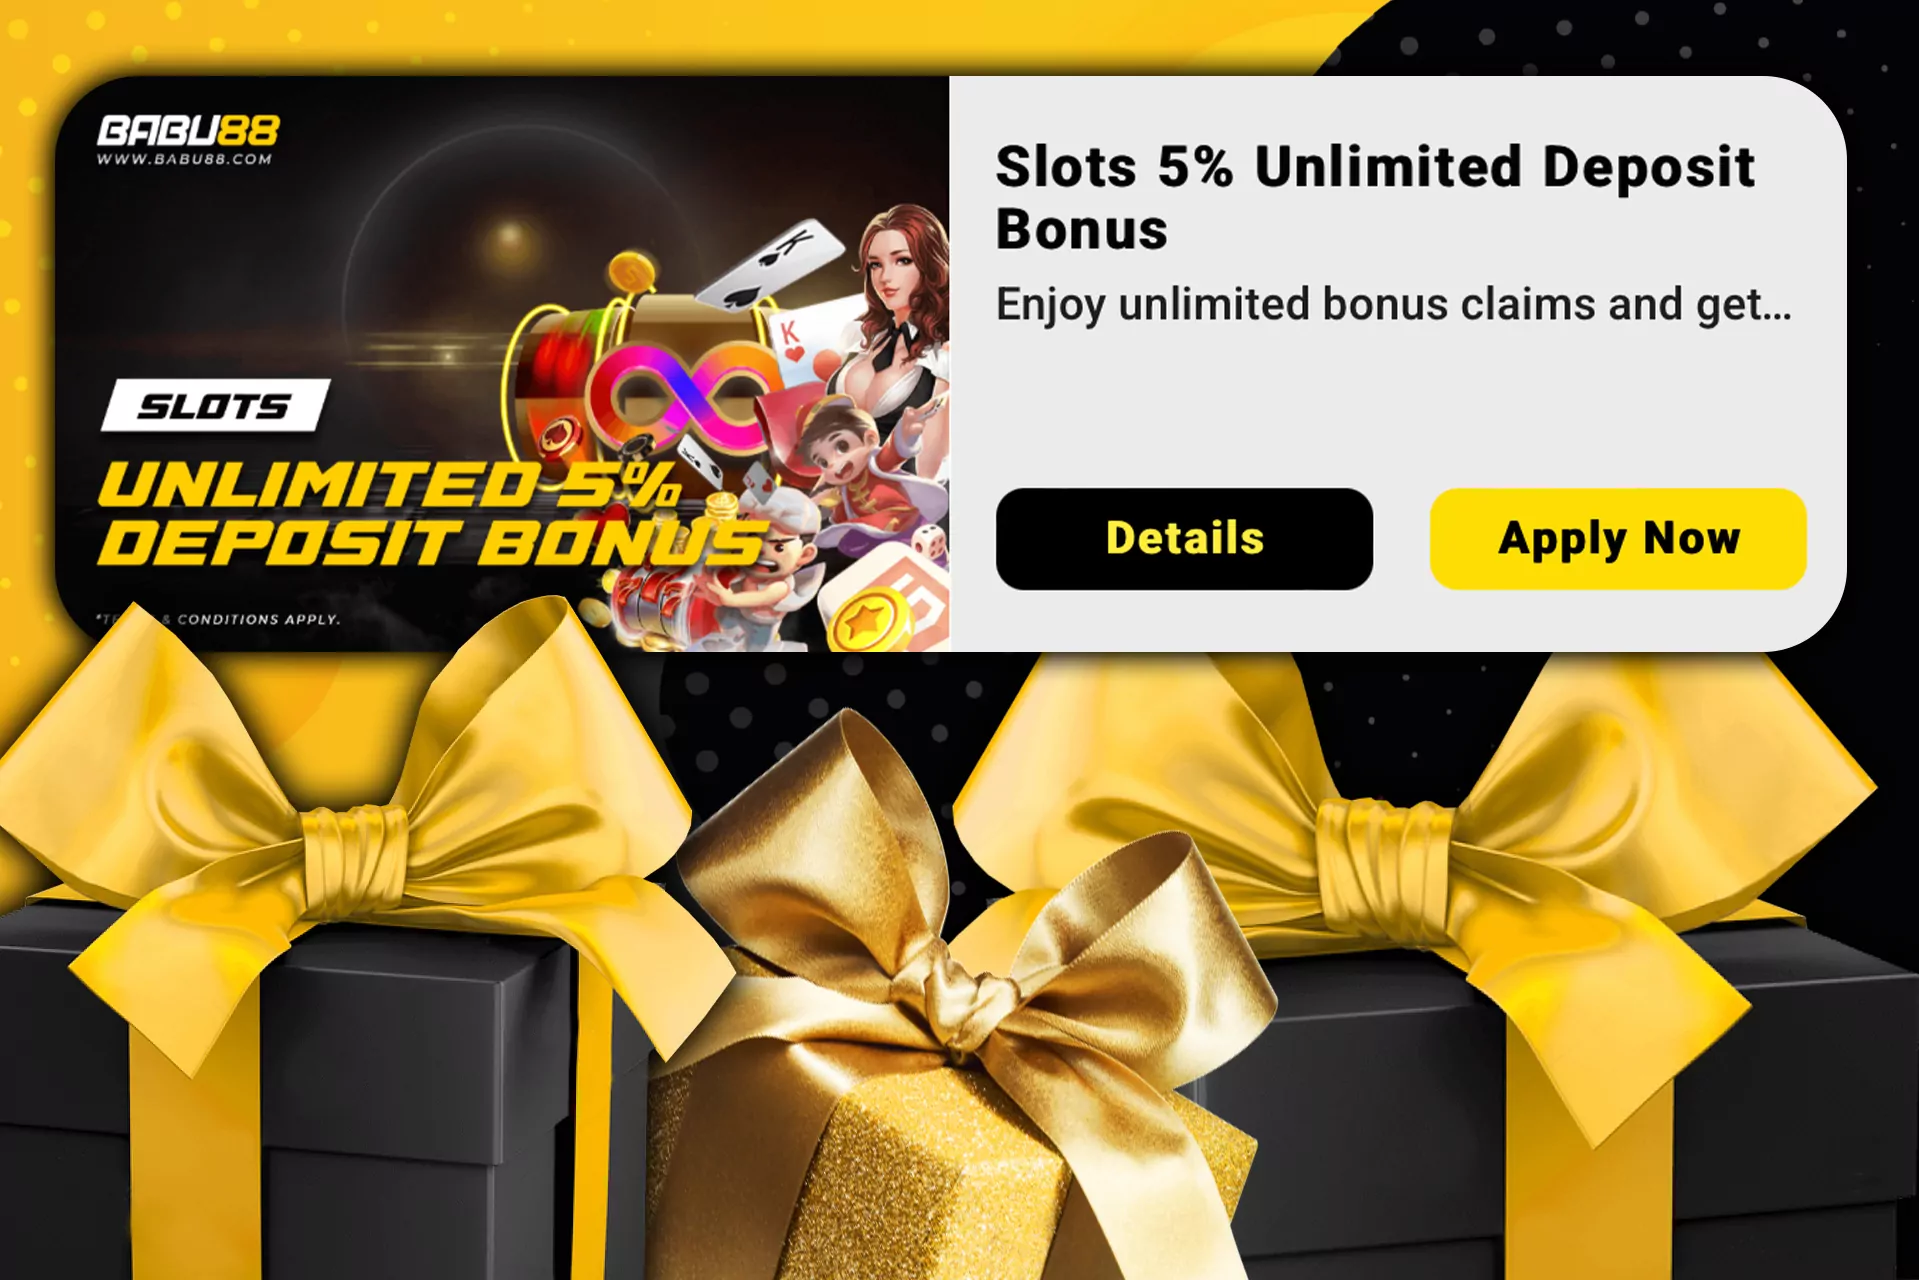 Get additional 5% bonus for playing slots.